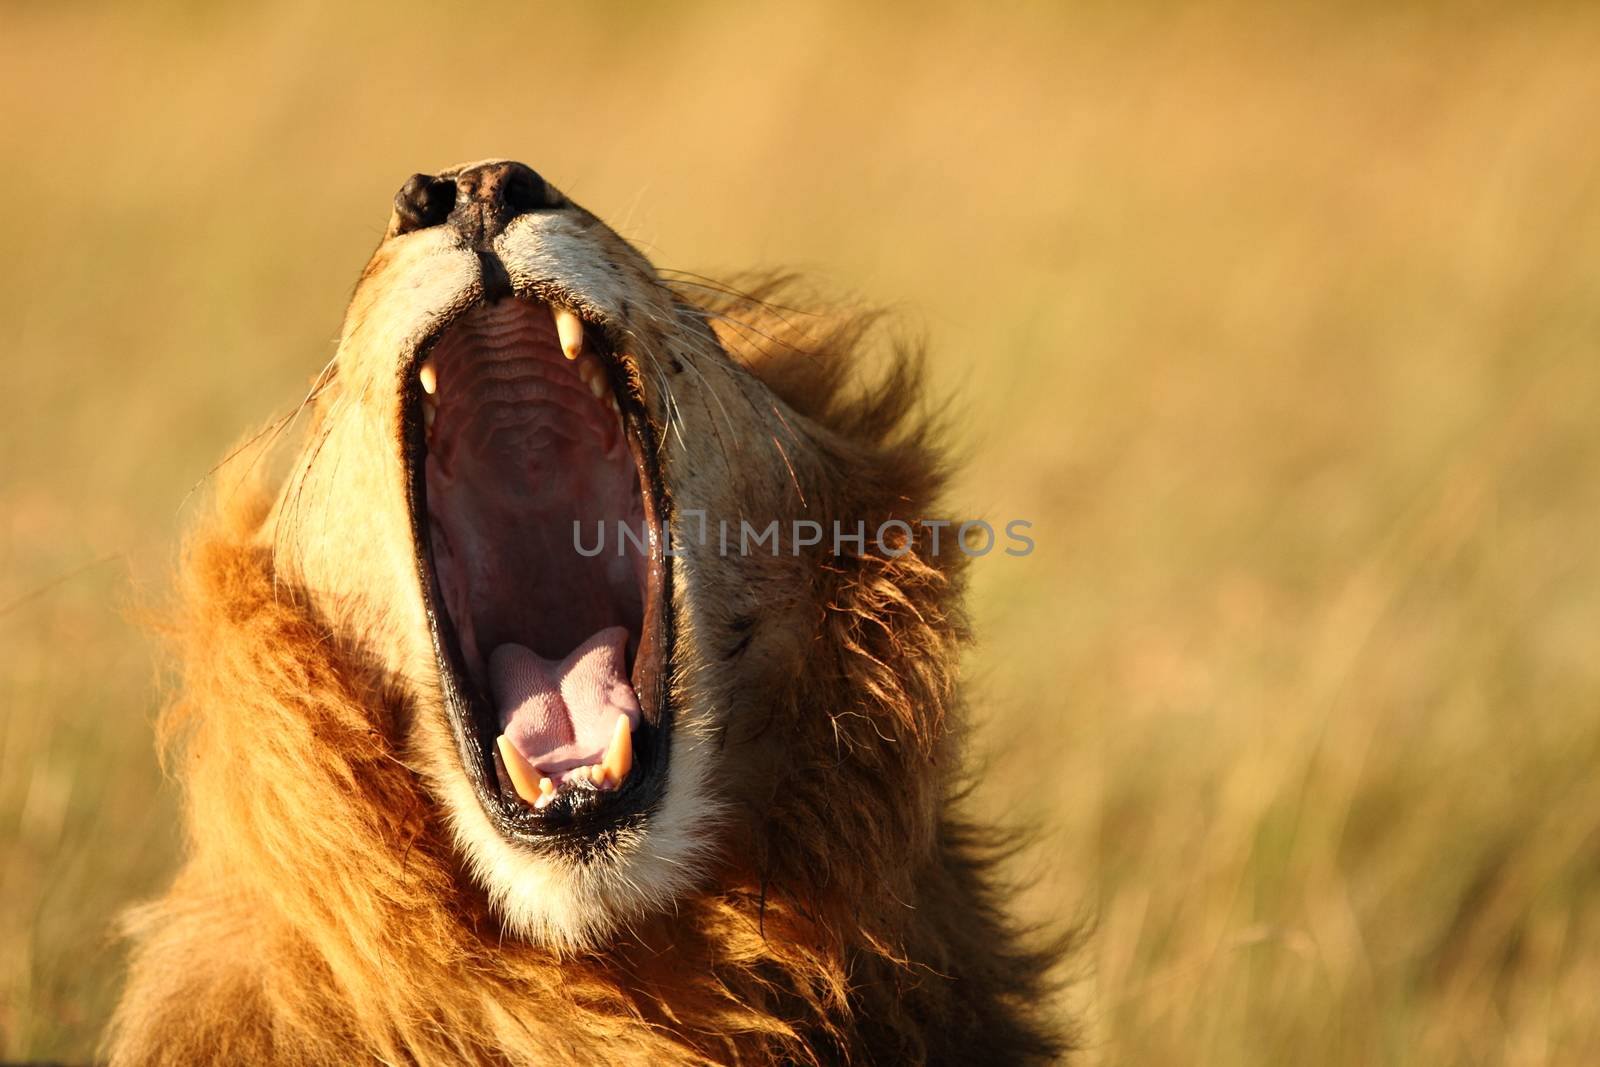 Lion in the wilderness of Africa by ozkanzozmen